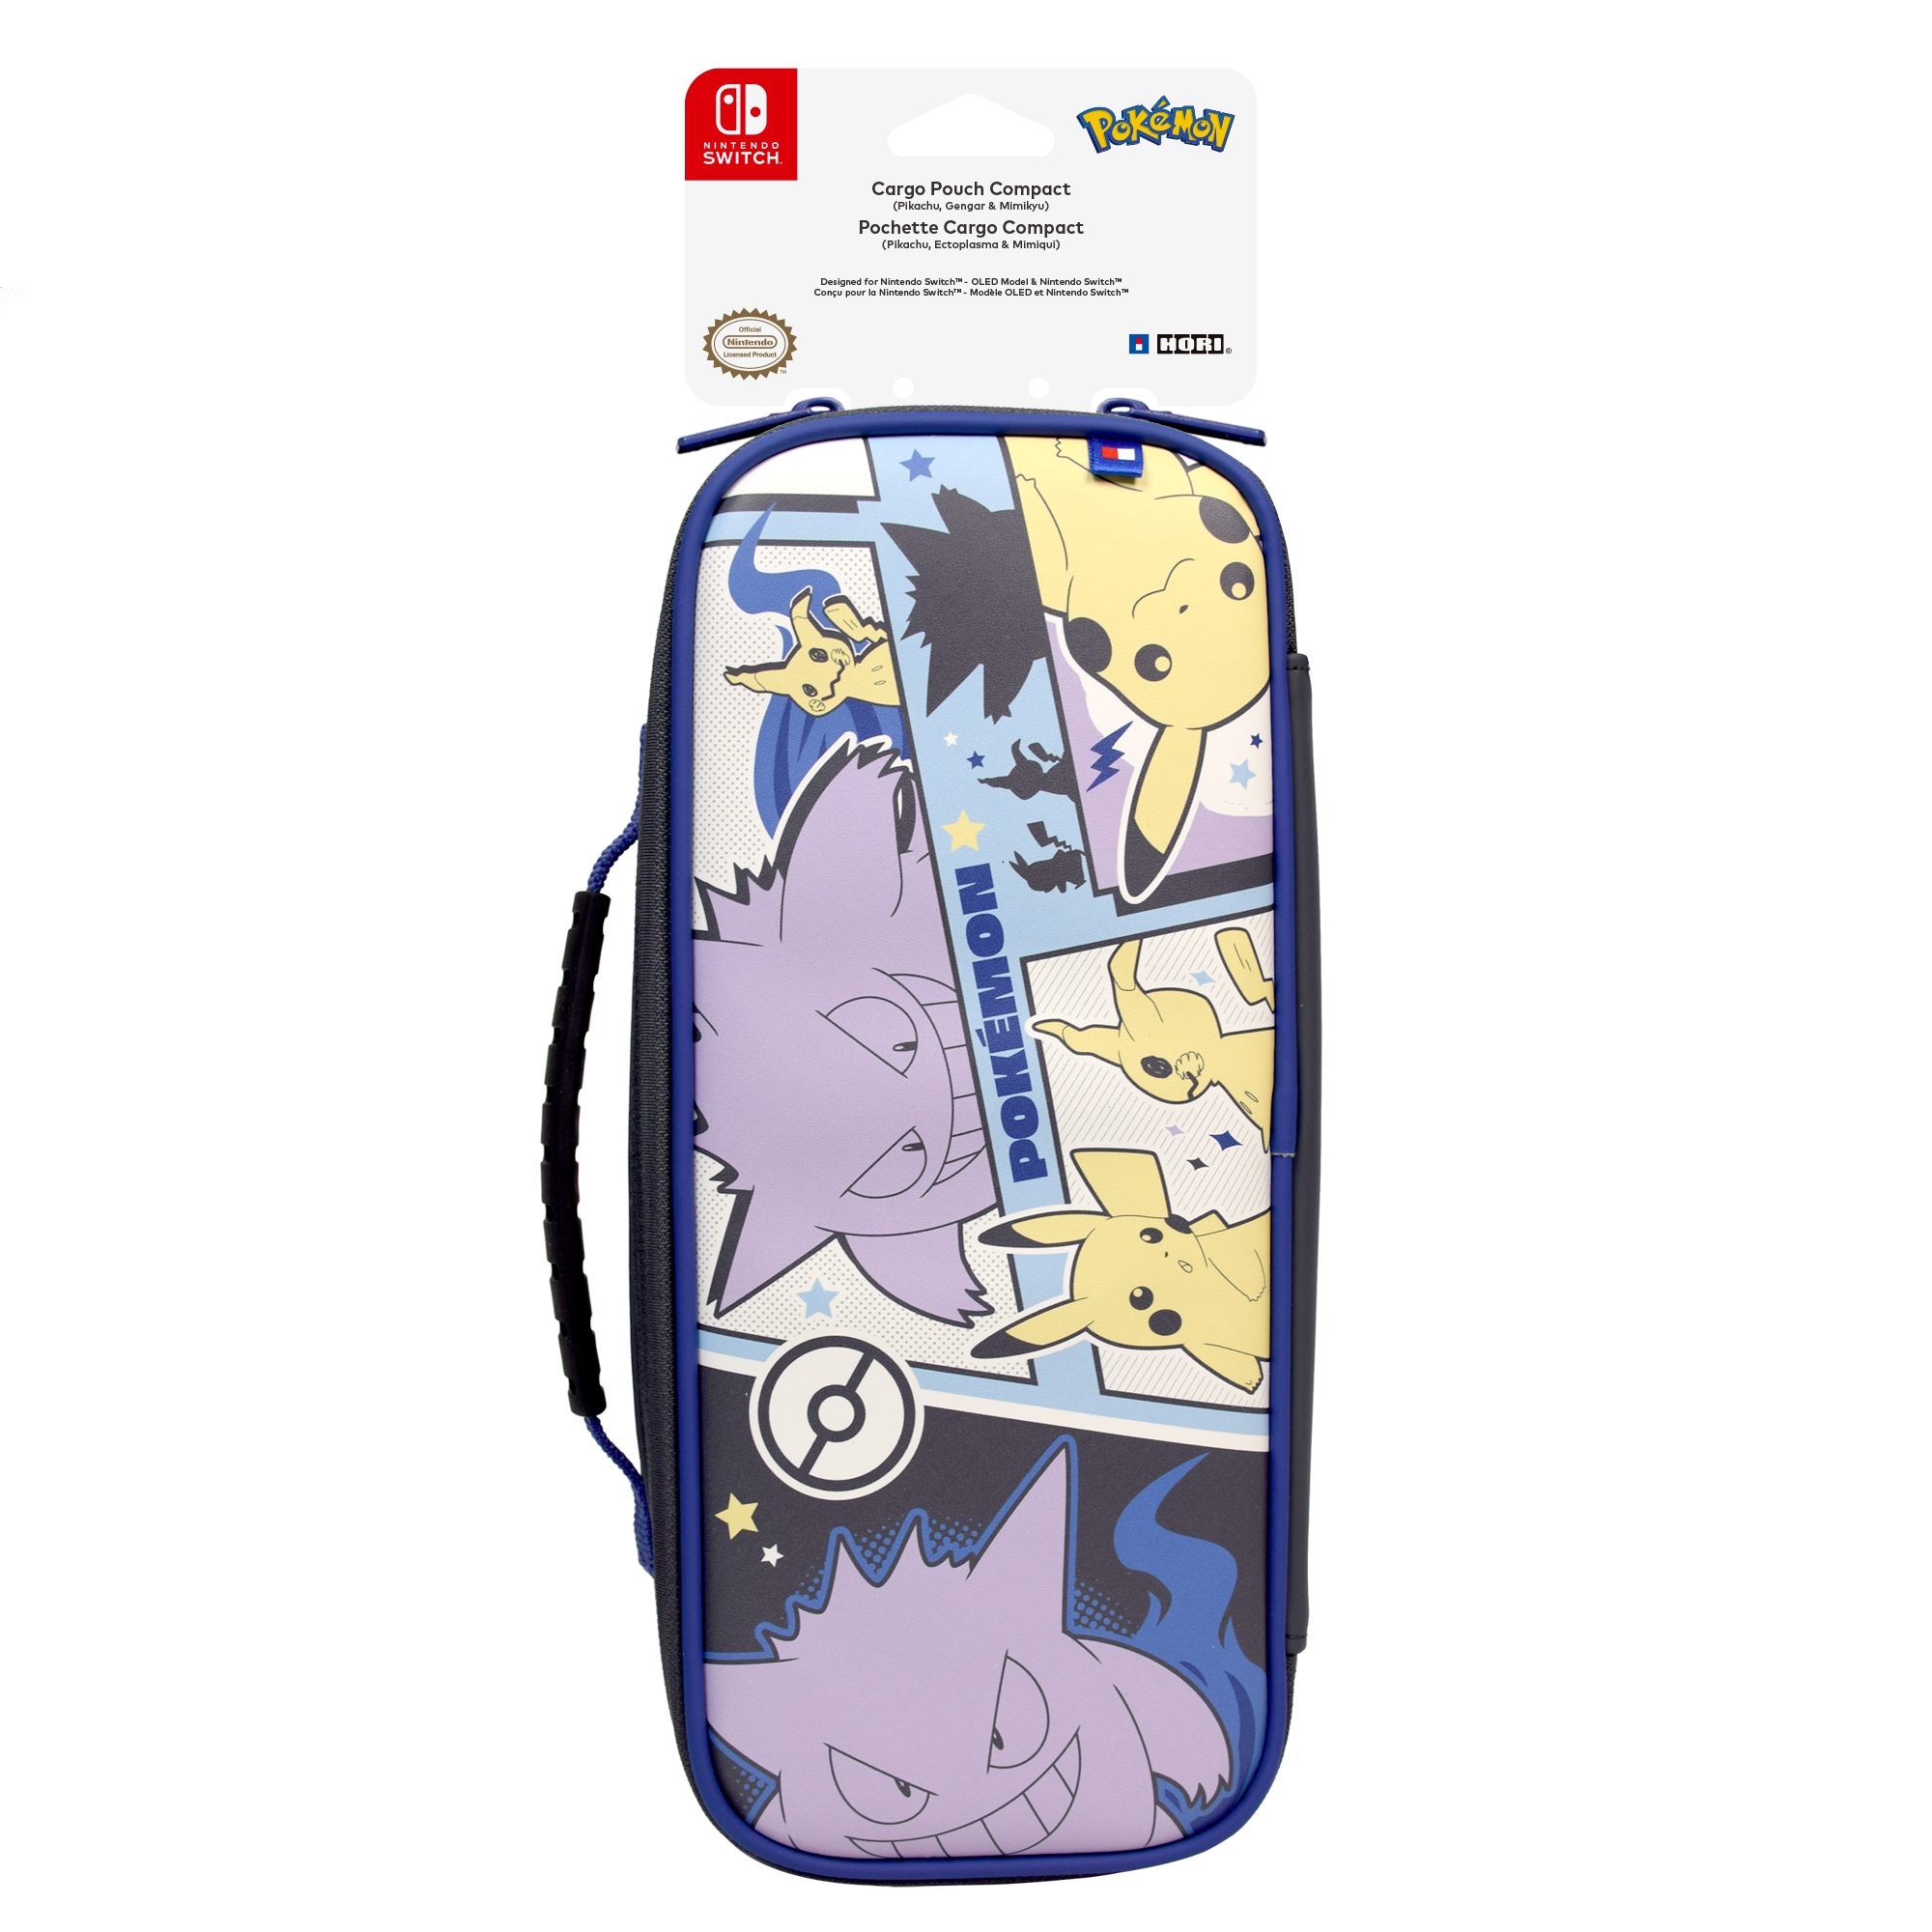 Hori Spielekonsolen-Tasche Switch Tasche - Compact Mimigma Pouch Gengar Pikachu, & Cargo